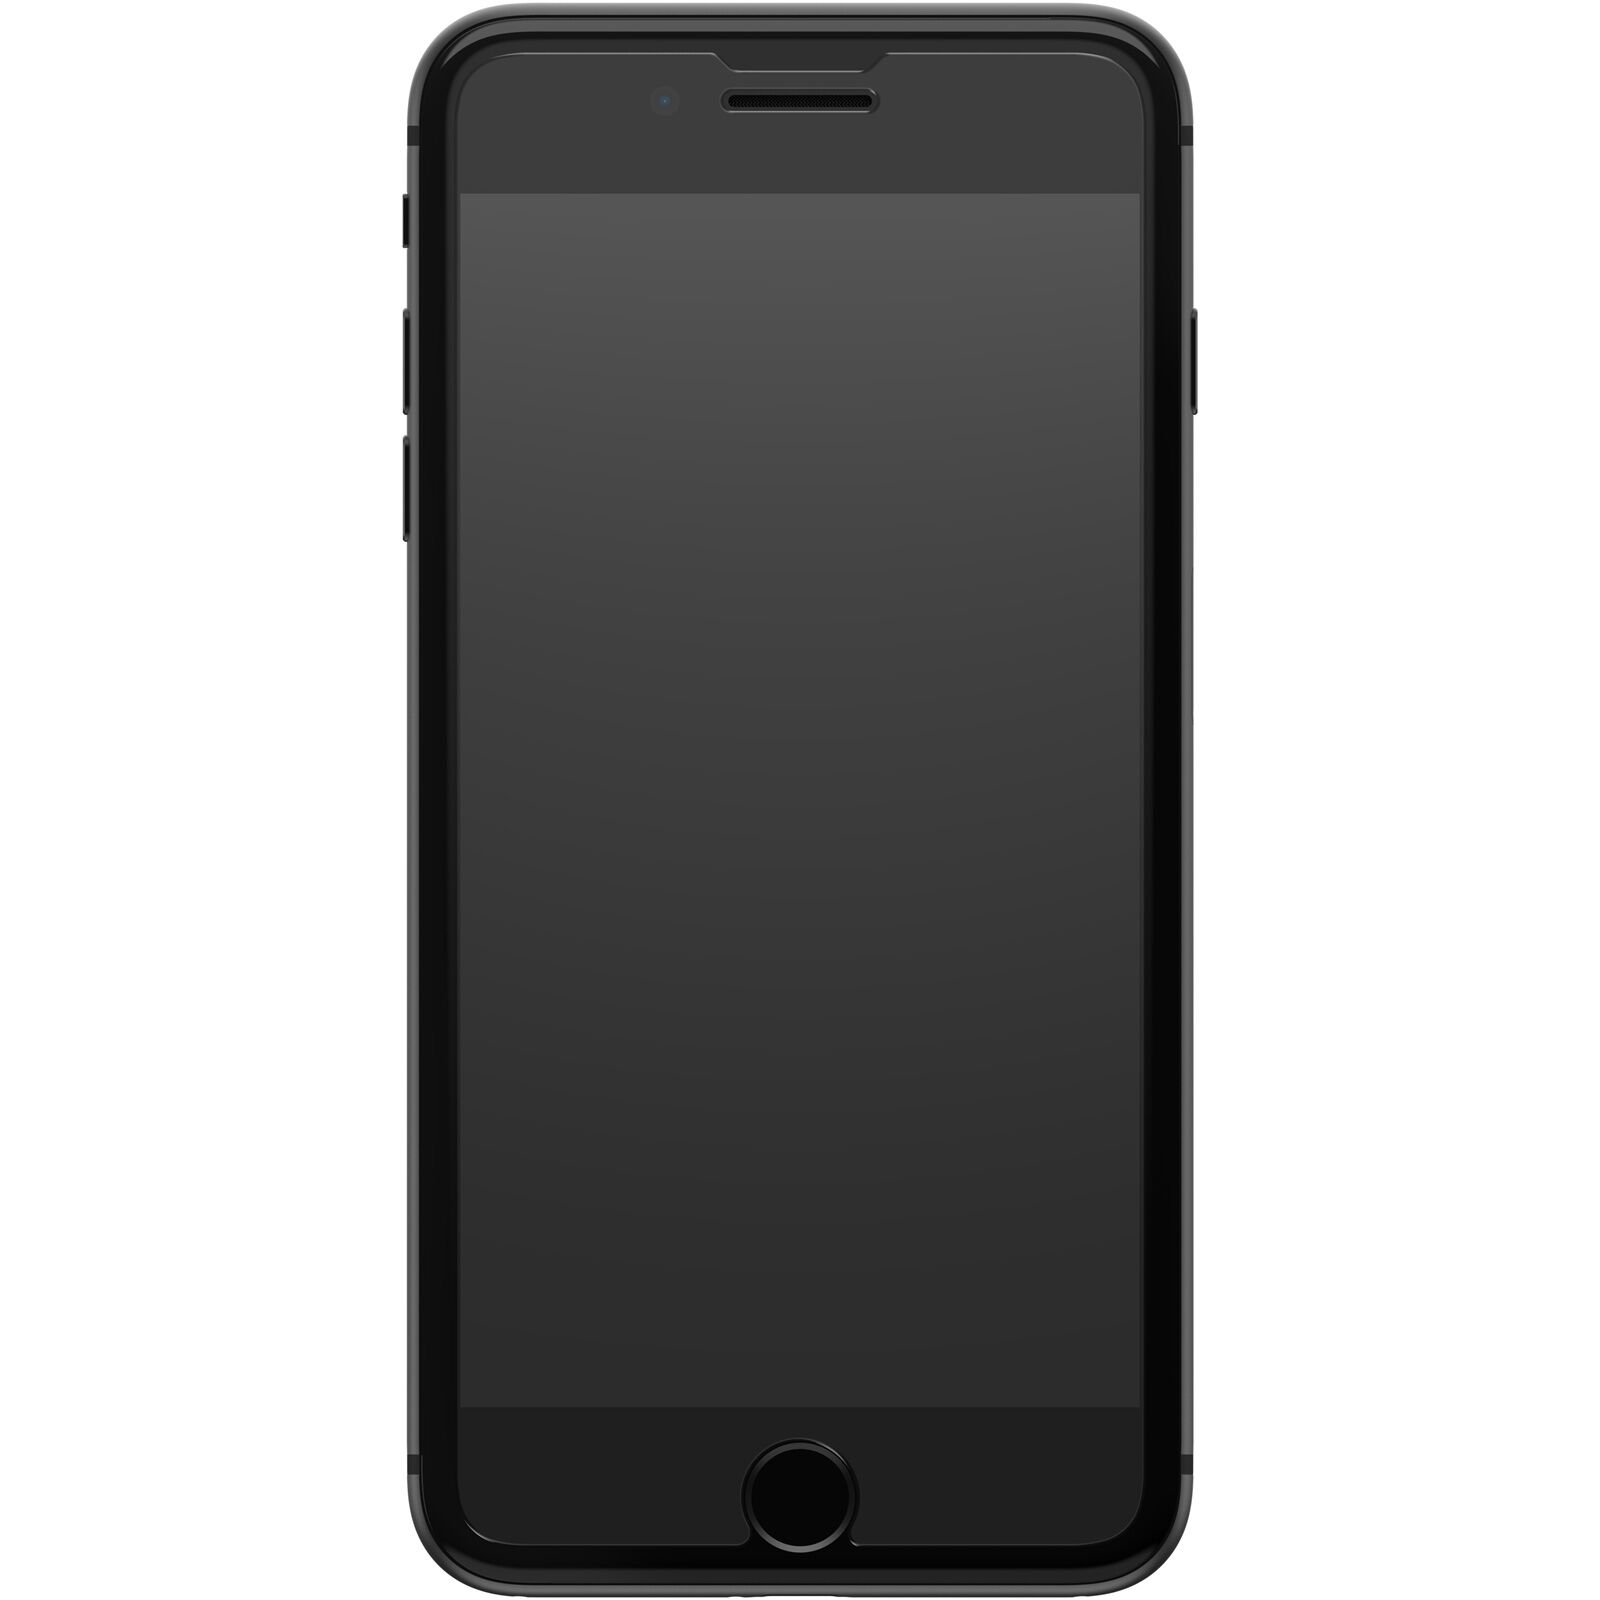 OtterBox Slim Case Bundle Alpha Glass Premium Screenguard Defining Protection for iPhone 8 Plus/7 Plus Lucent Blazer